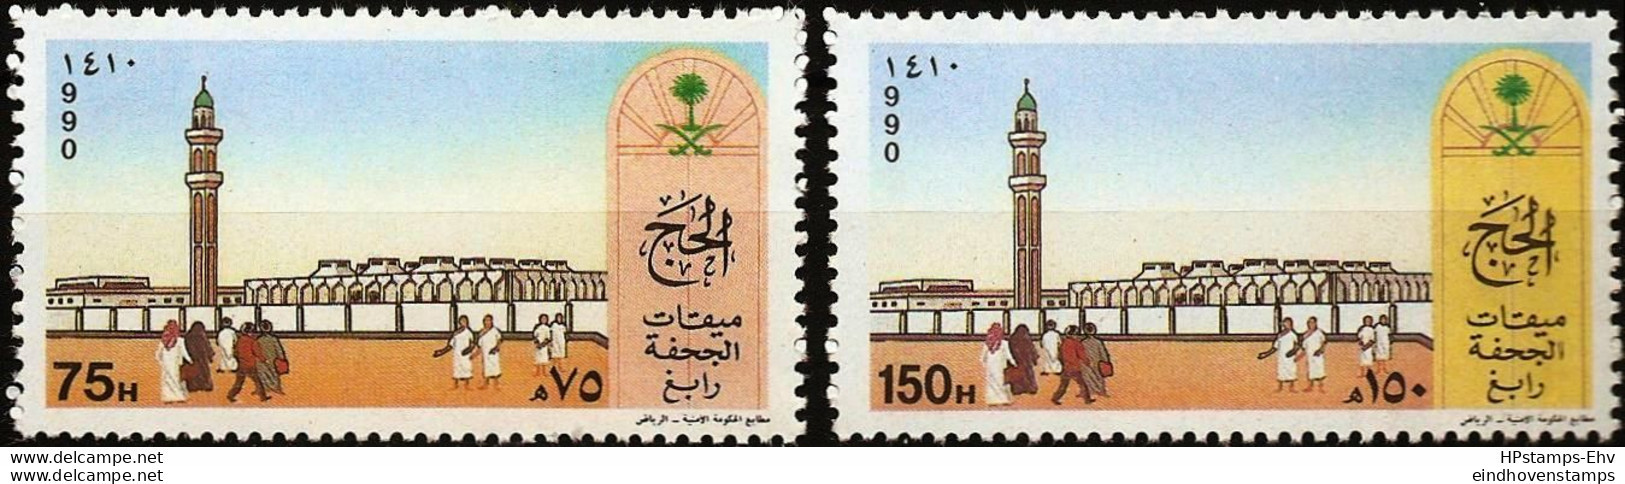 Saudi Arabia 1990 Pelgrimage 2 Values MNH SA-90-06 Juhfa Mosque - Islam